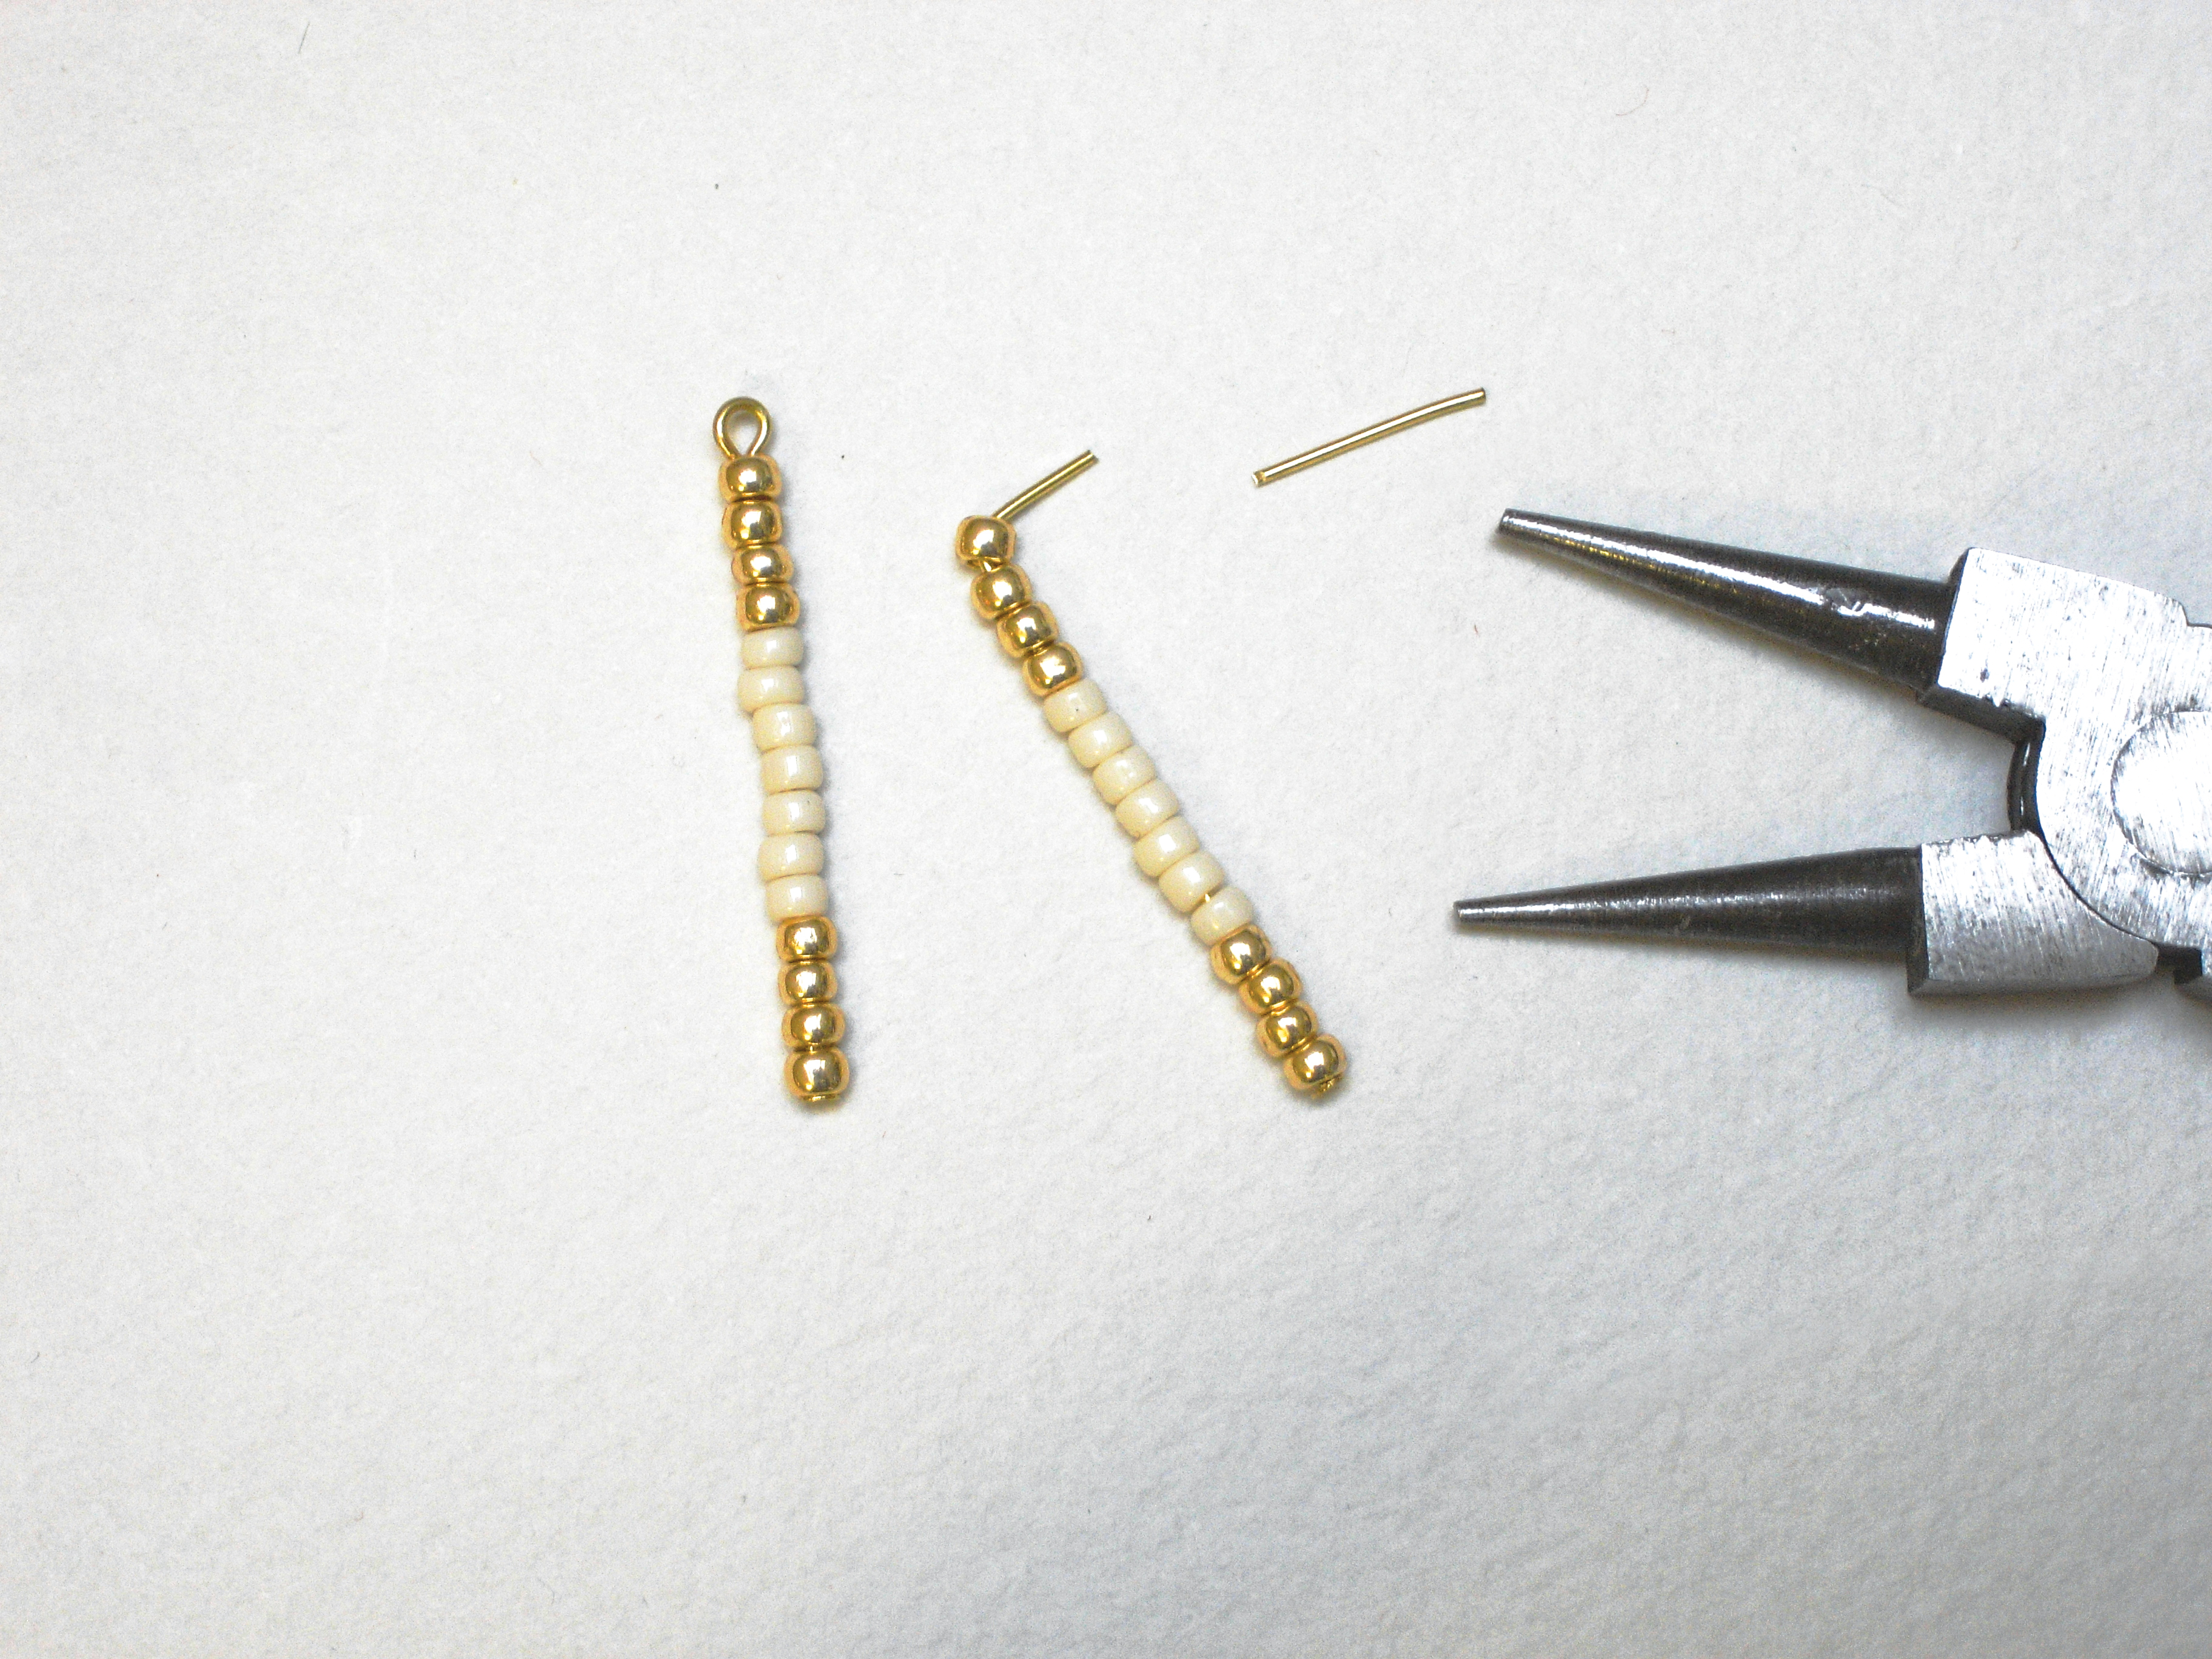 How to make seed bead earrings – step 1